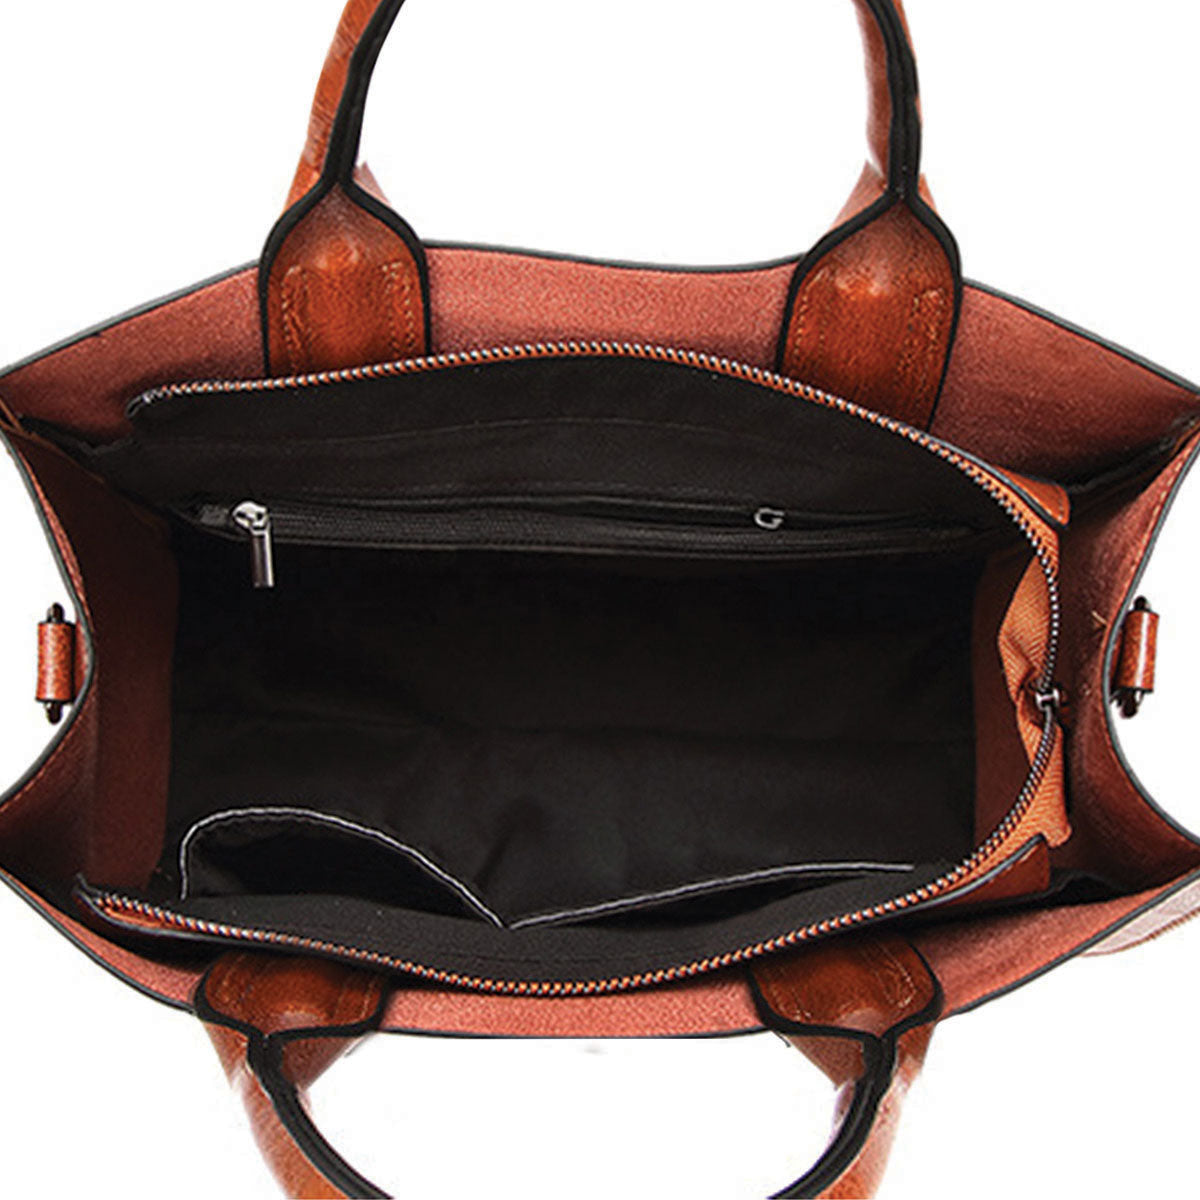 Your Best Companion - Cavalier King Charles Spaniel Luxury Handbag V1